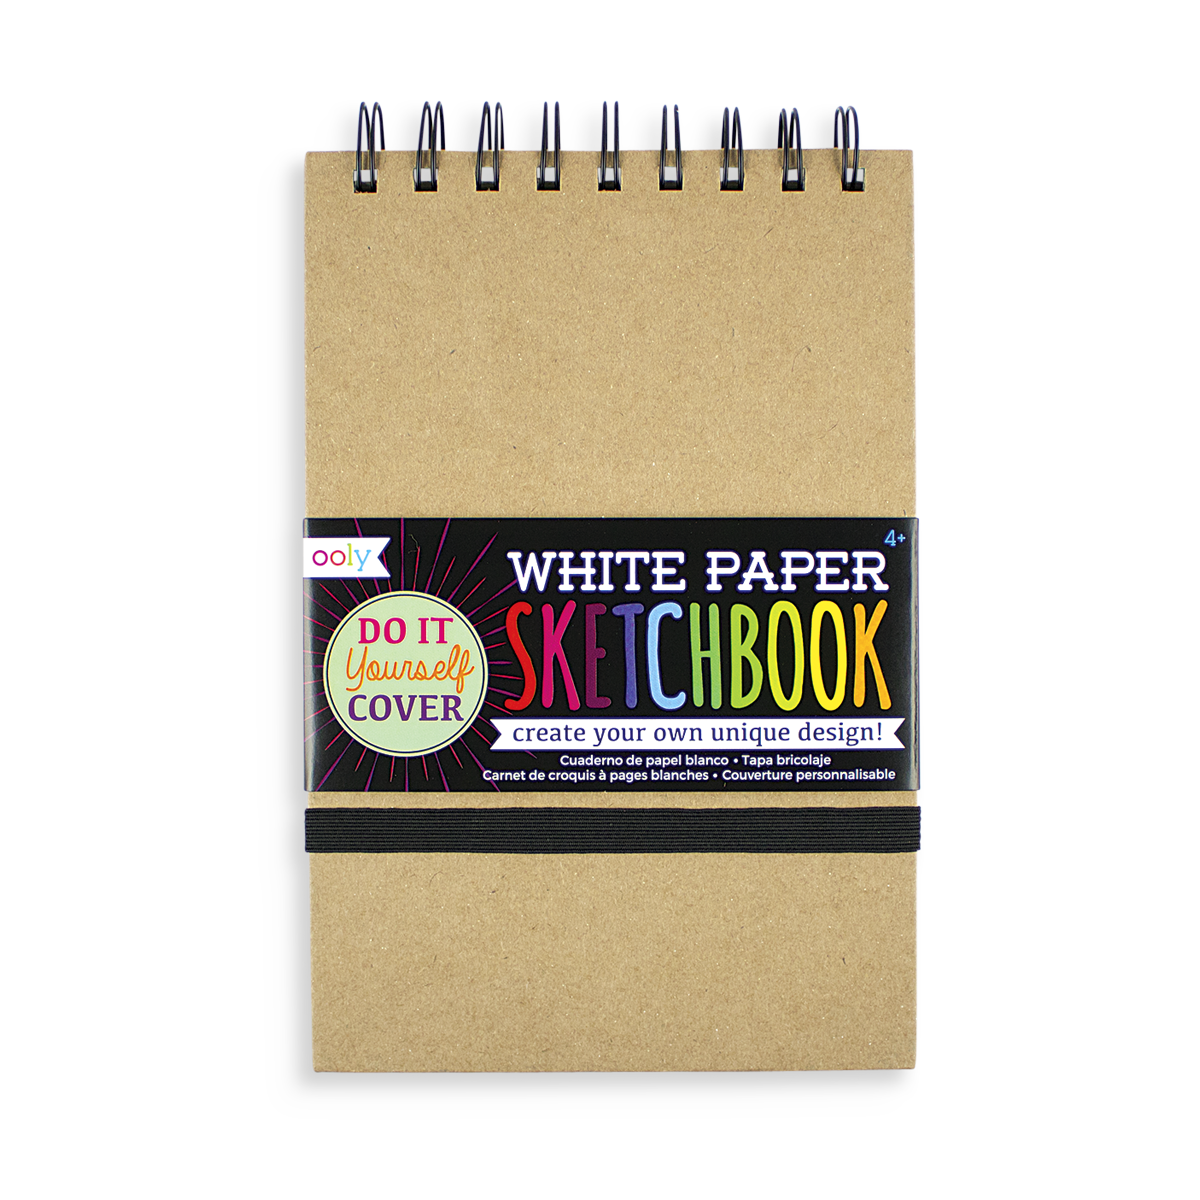 White DIY Cover Sketchbook  Sketch book, Small sketchbook, White paper